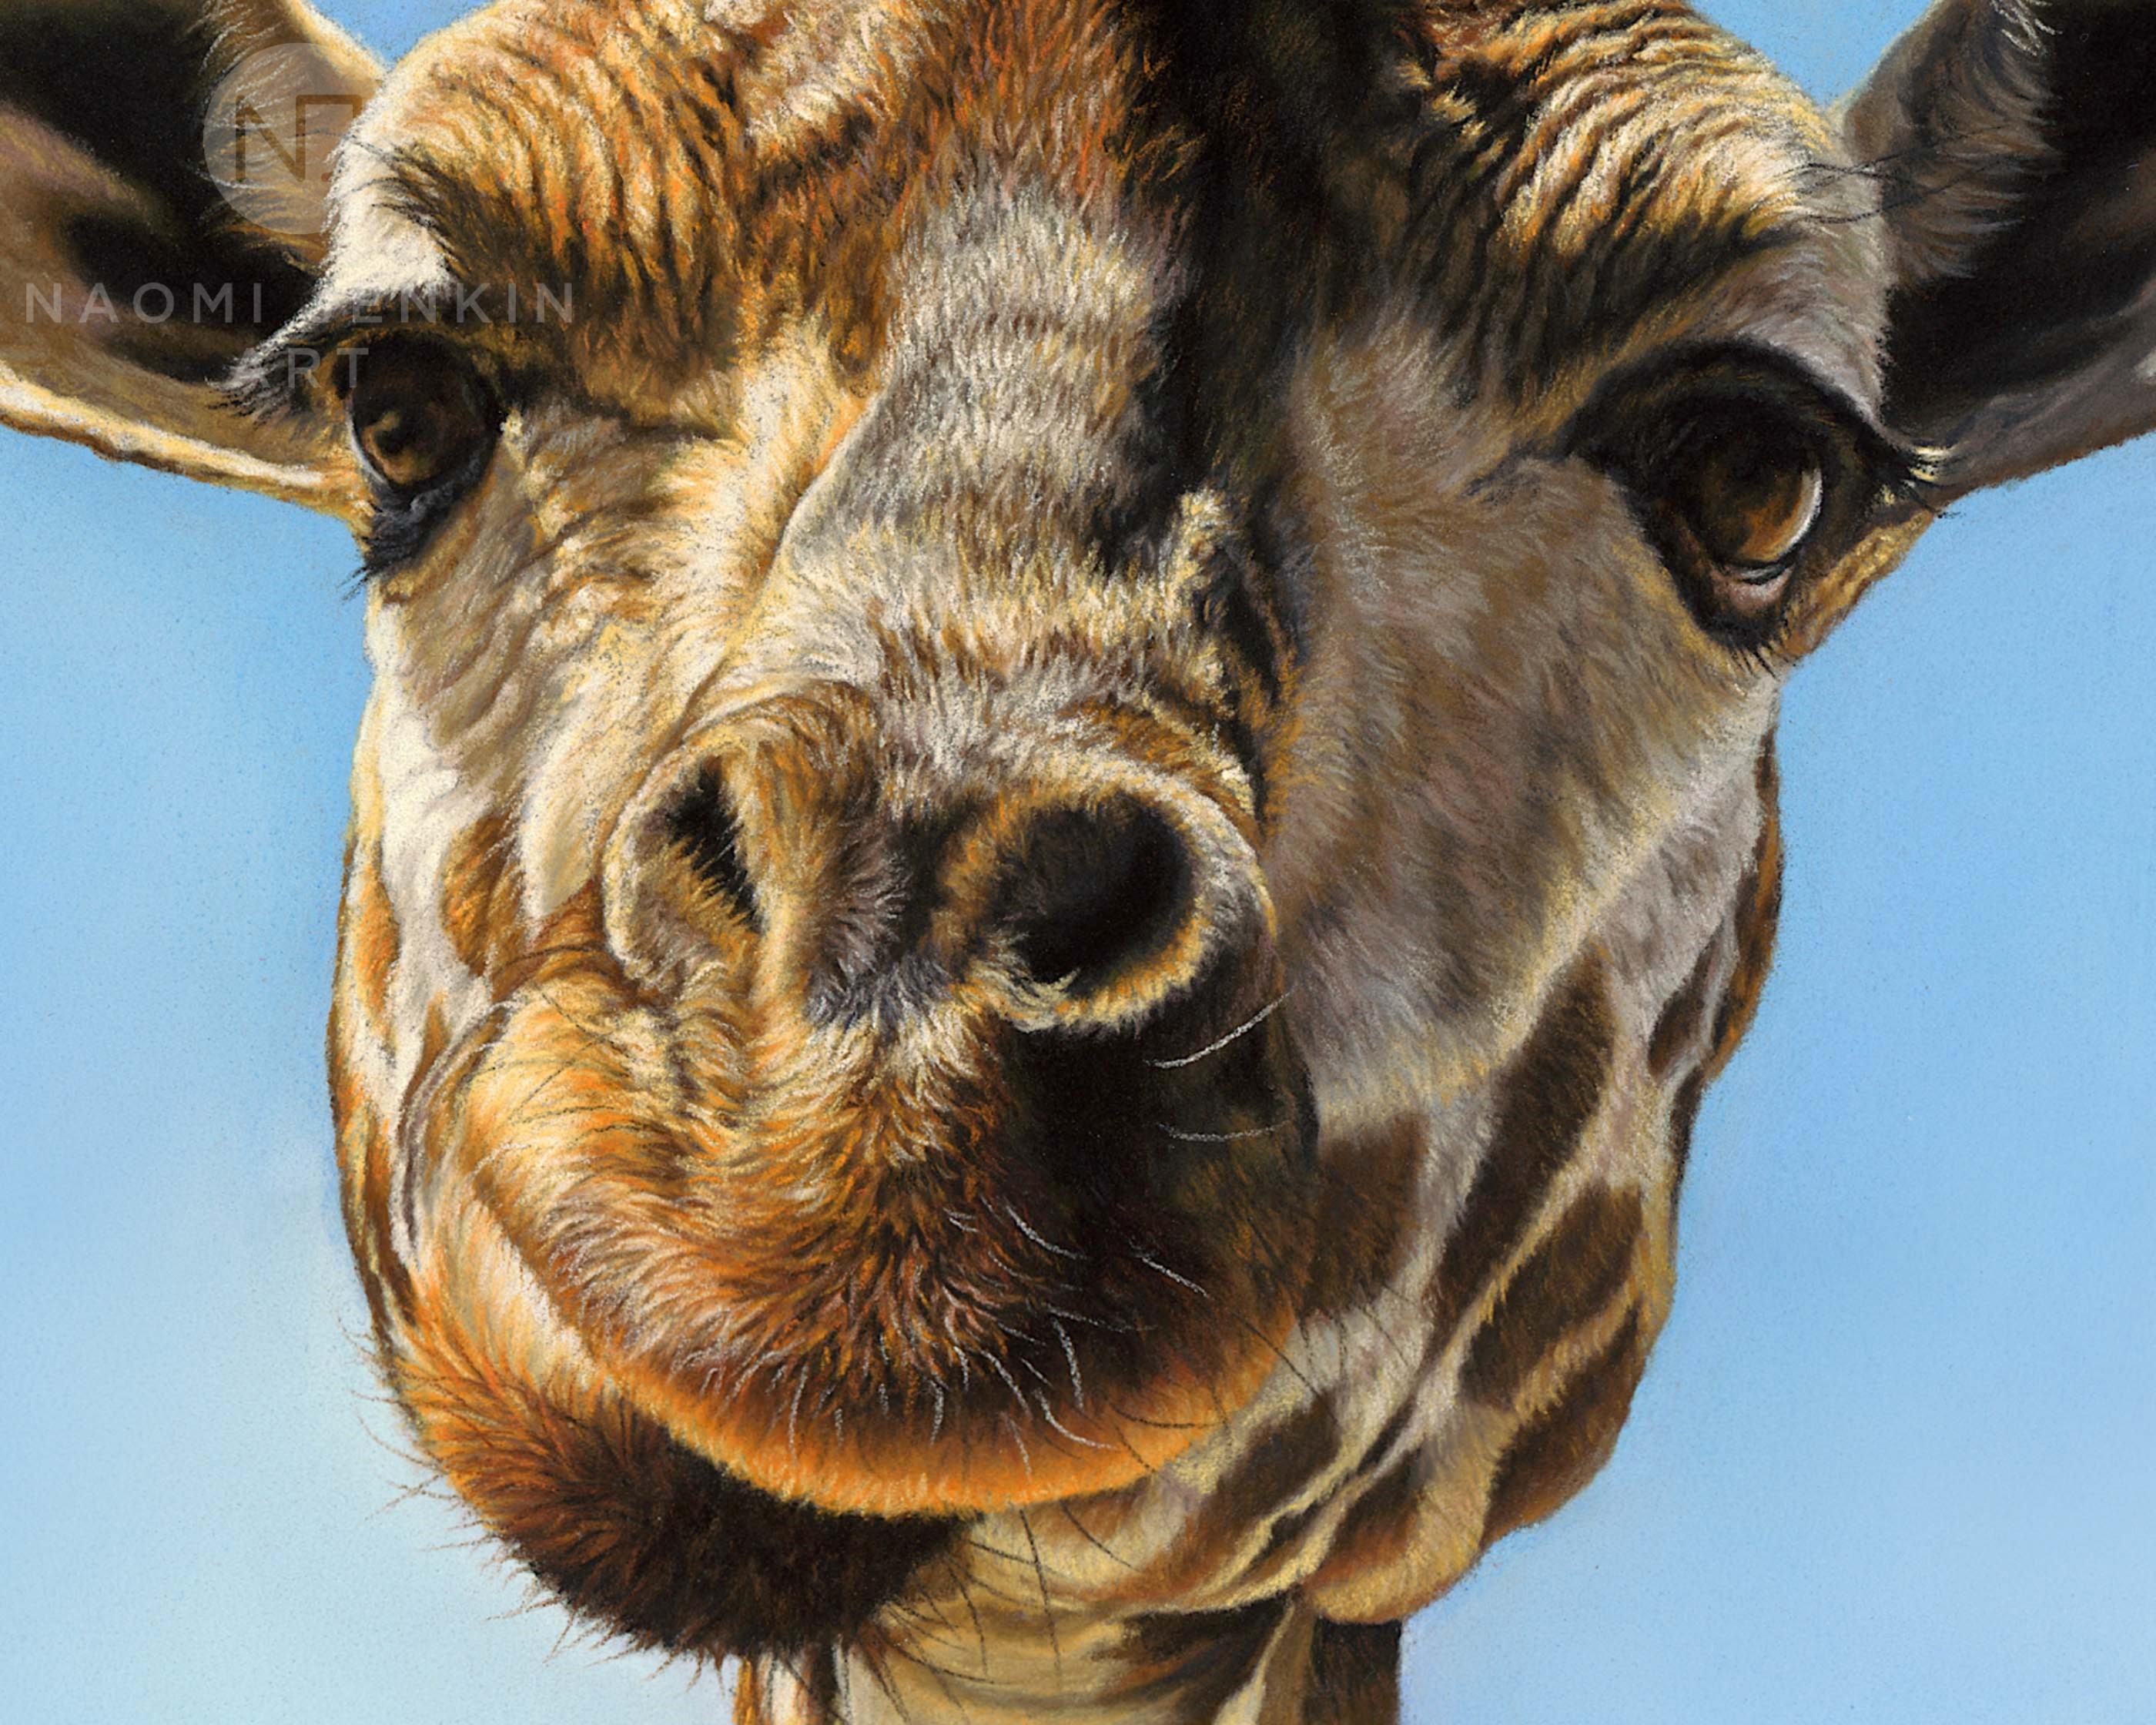 Close up of giraffe drawing by wildlife artist Naomi Jenkin.